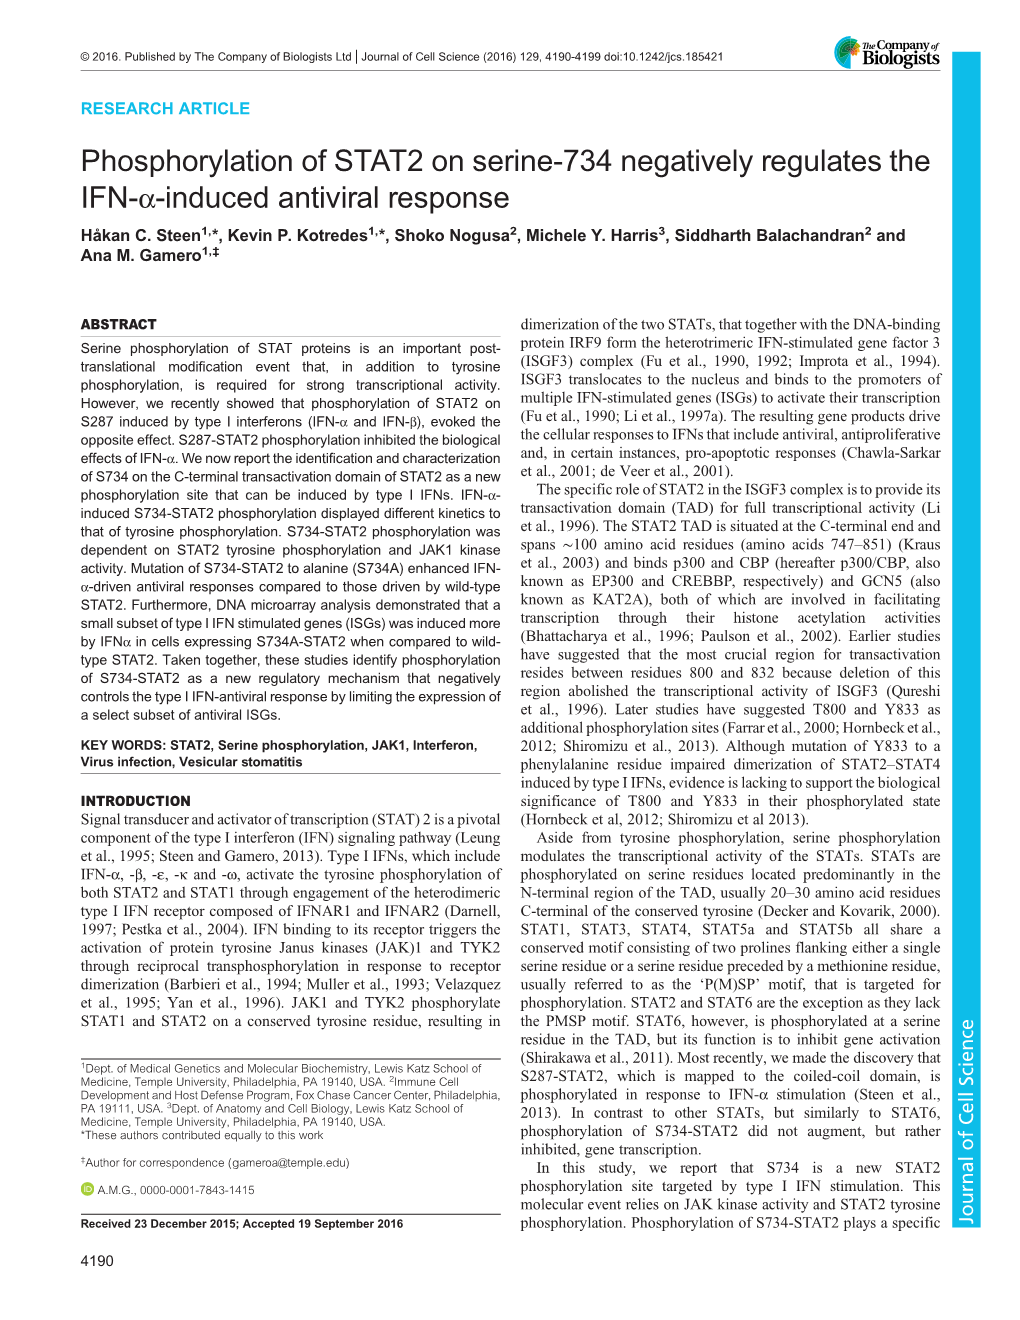 Phosphorylation of STAT2 on Serine-734 Negatively Regulates the IFN-Α-Induced Antiviral Response Håkan C